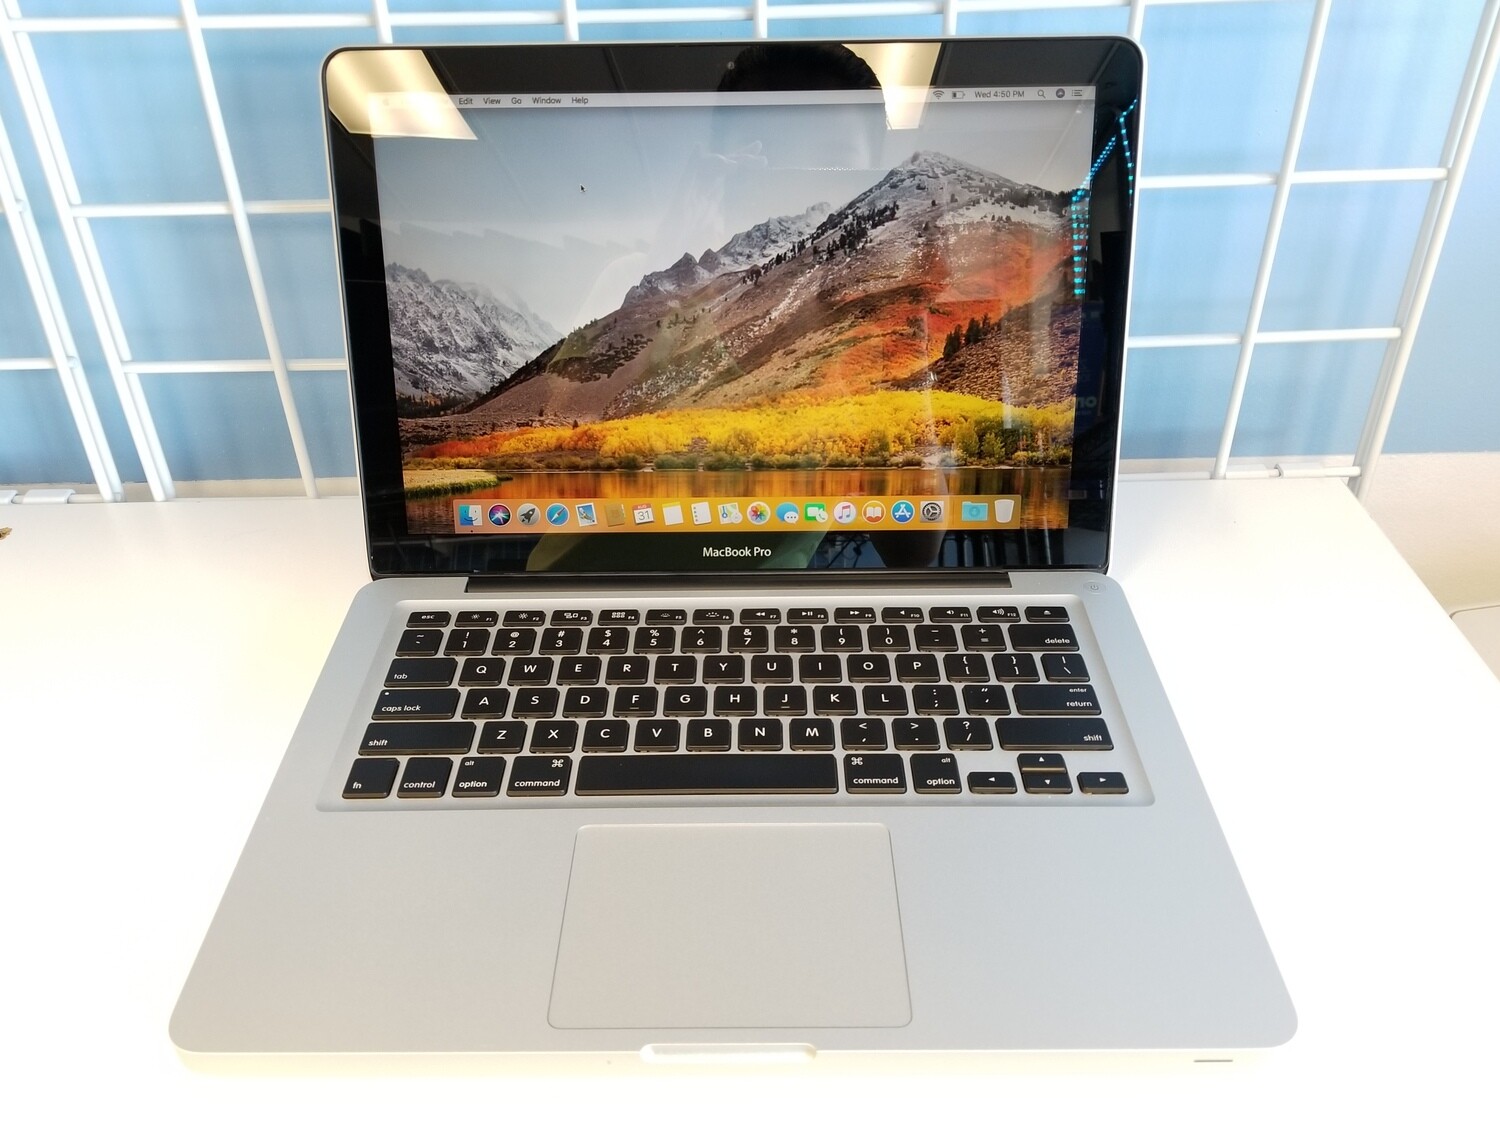 Vejrudsigt alien klima Apple MacBook Pro 13" 2011 A1278 Intel Core i5 @2.40GHz 8GB RAM 128GB SSD,  1280x800, macOS High Sierra, Intel HD Graphics 3000 512 MB - Store - Sell  Your Macbook Pro, Sell